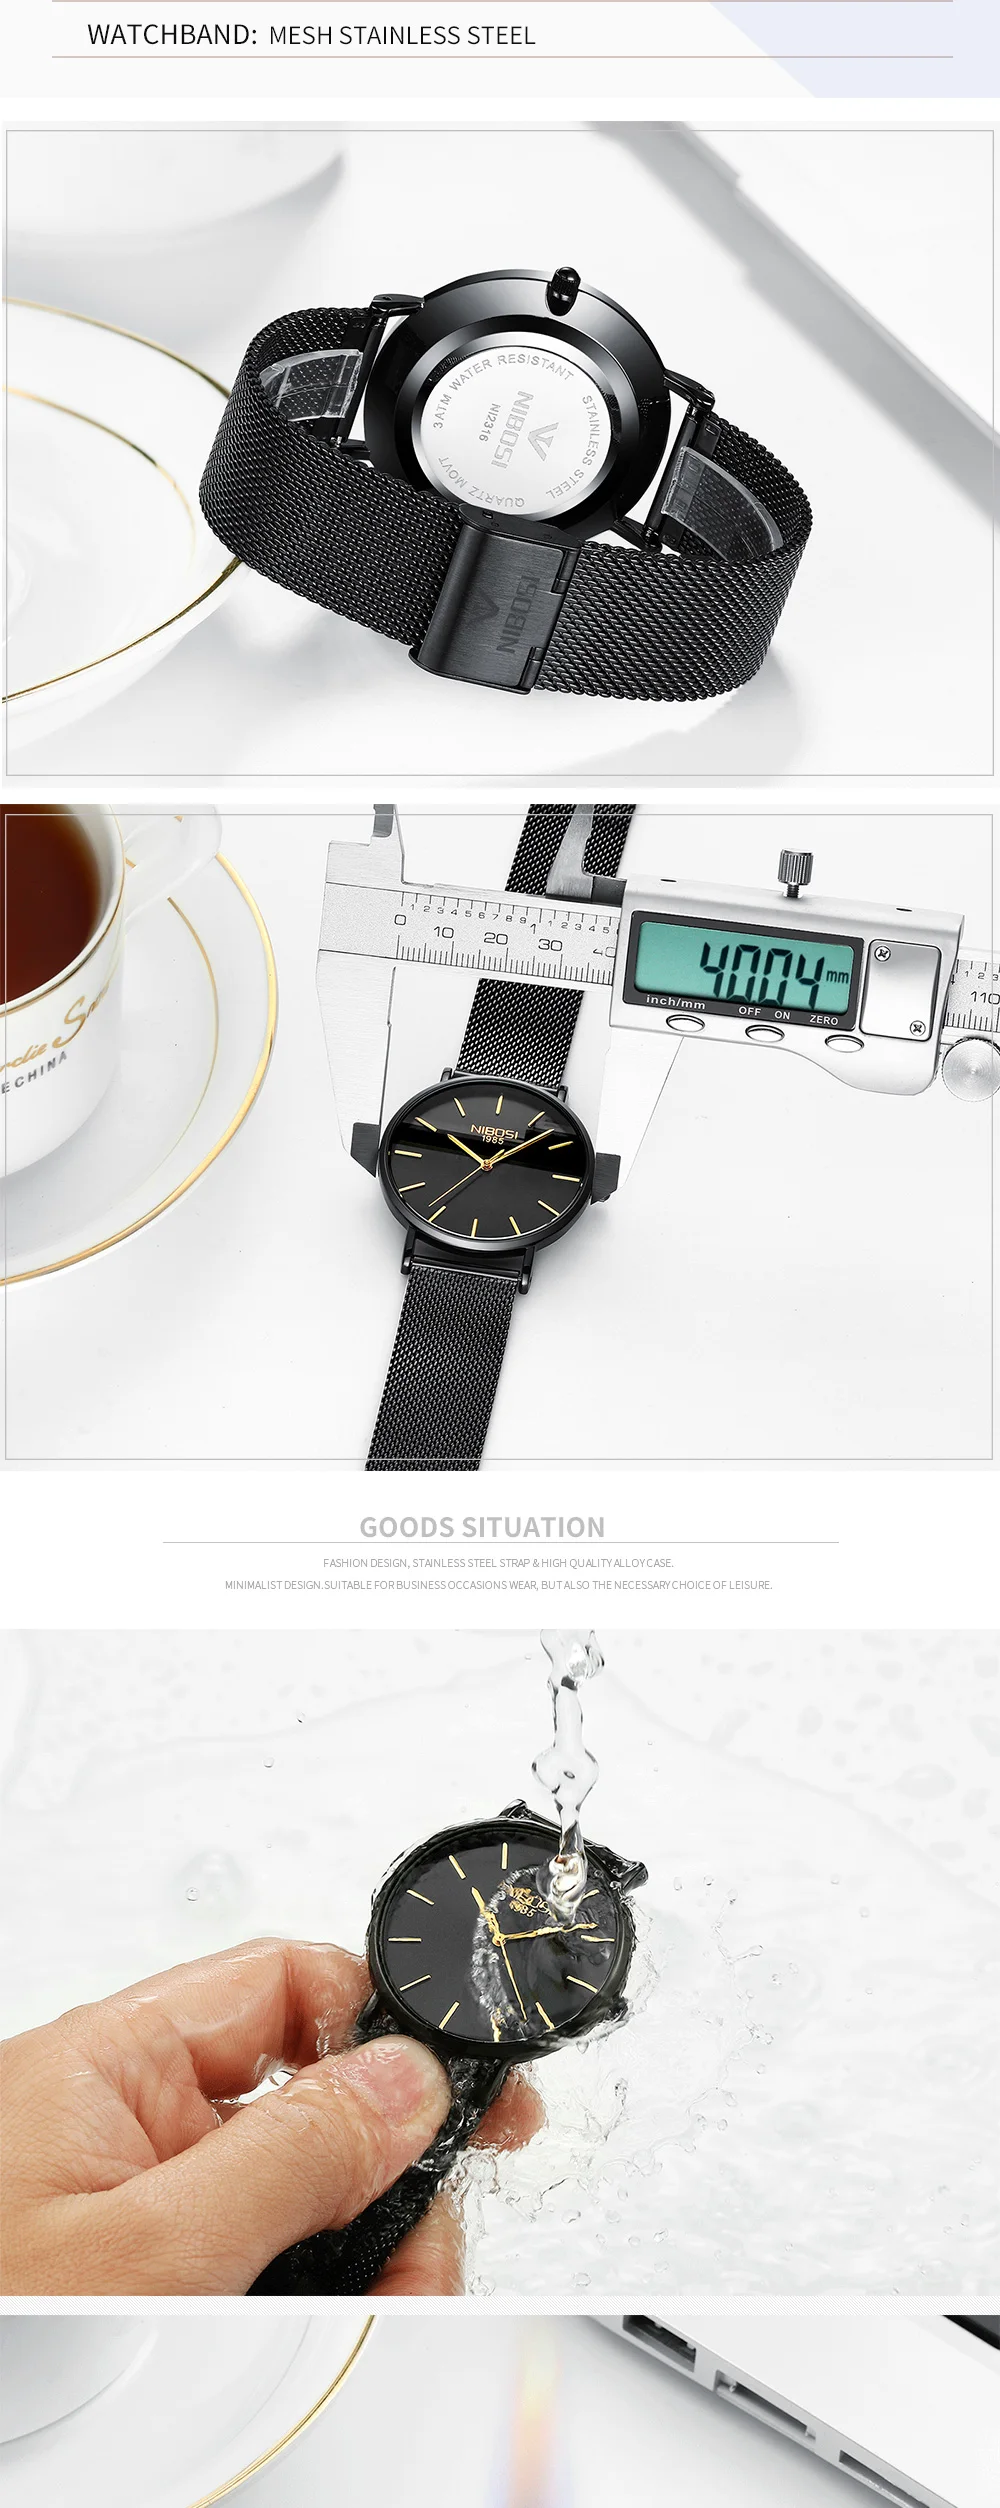 shifenmei 115 watch wrist oem quartz brand ultra thin luxury man mens leather watch